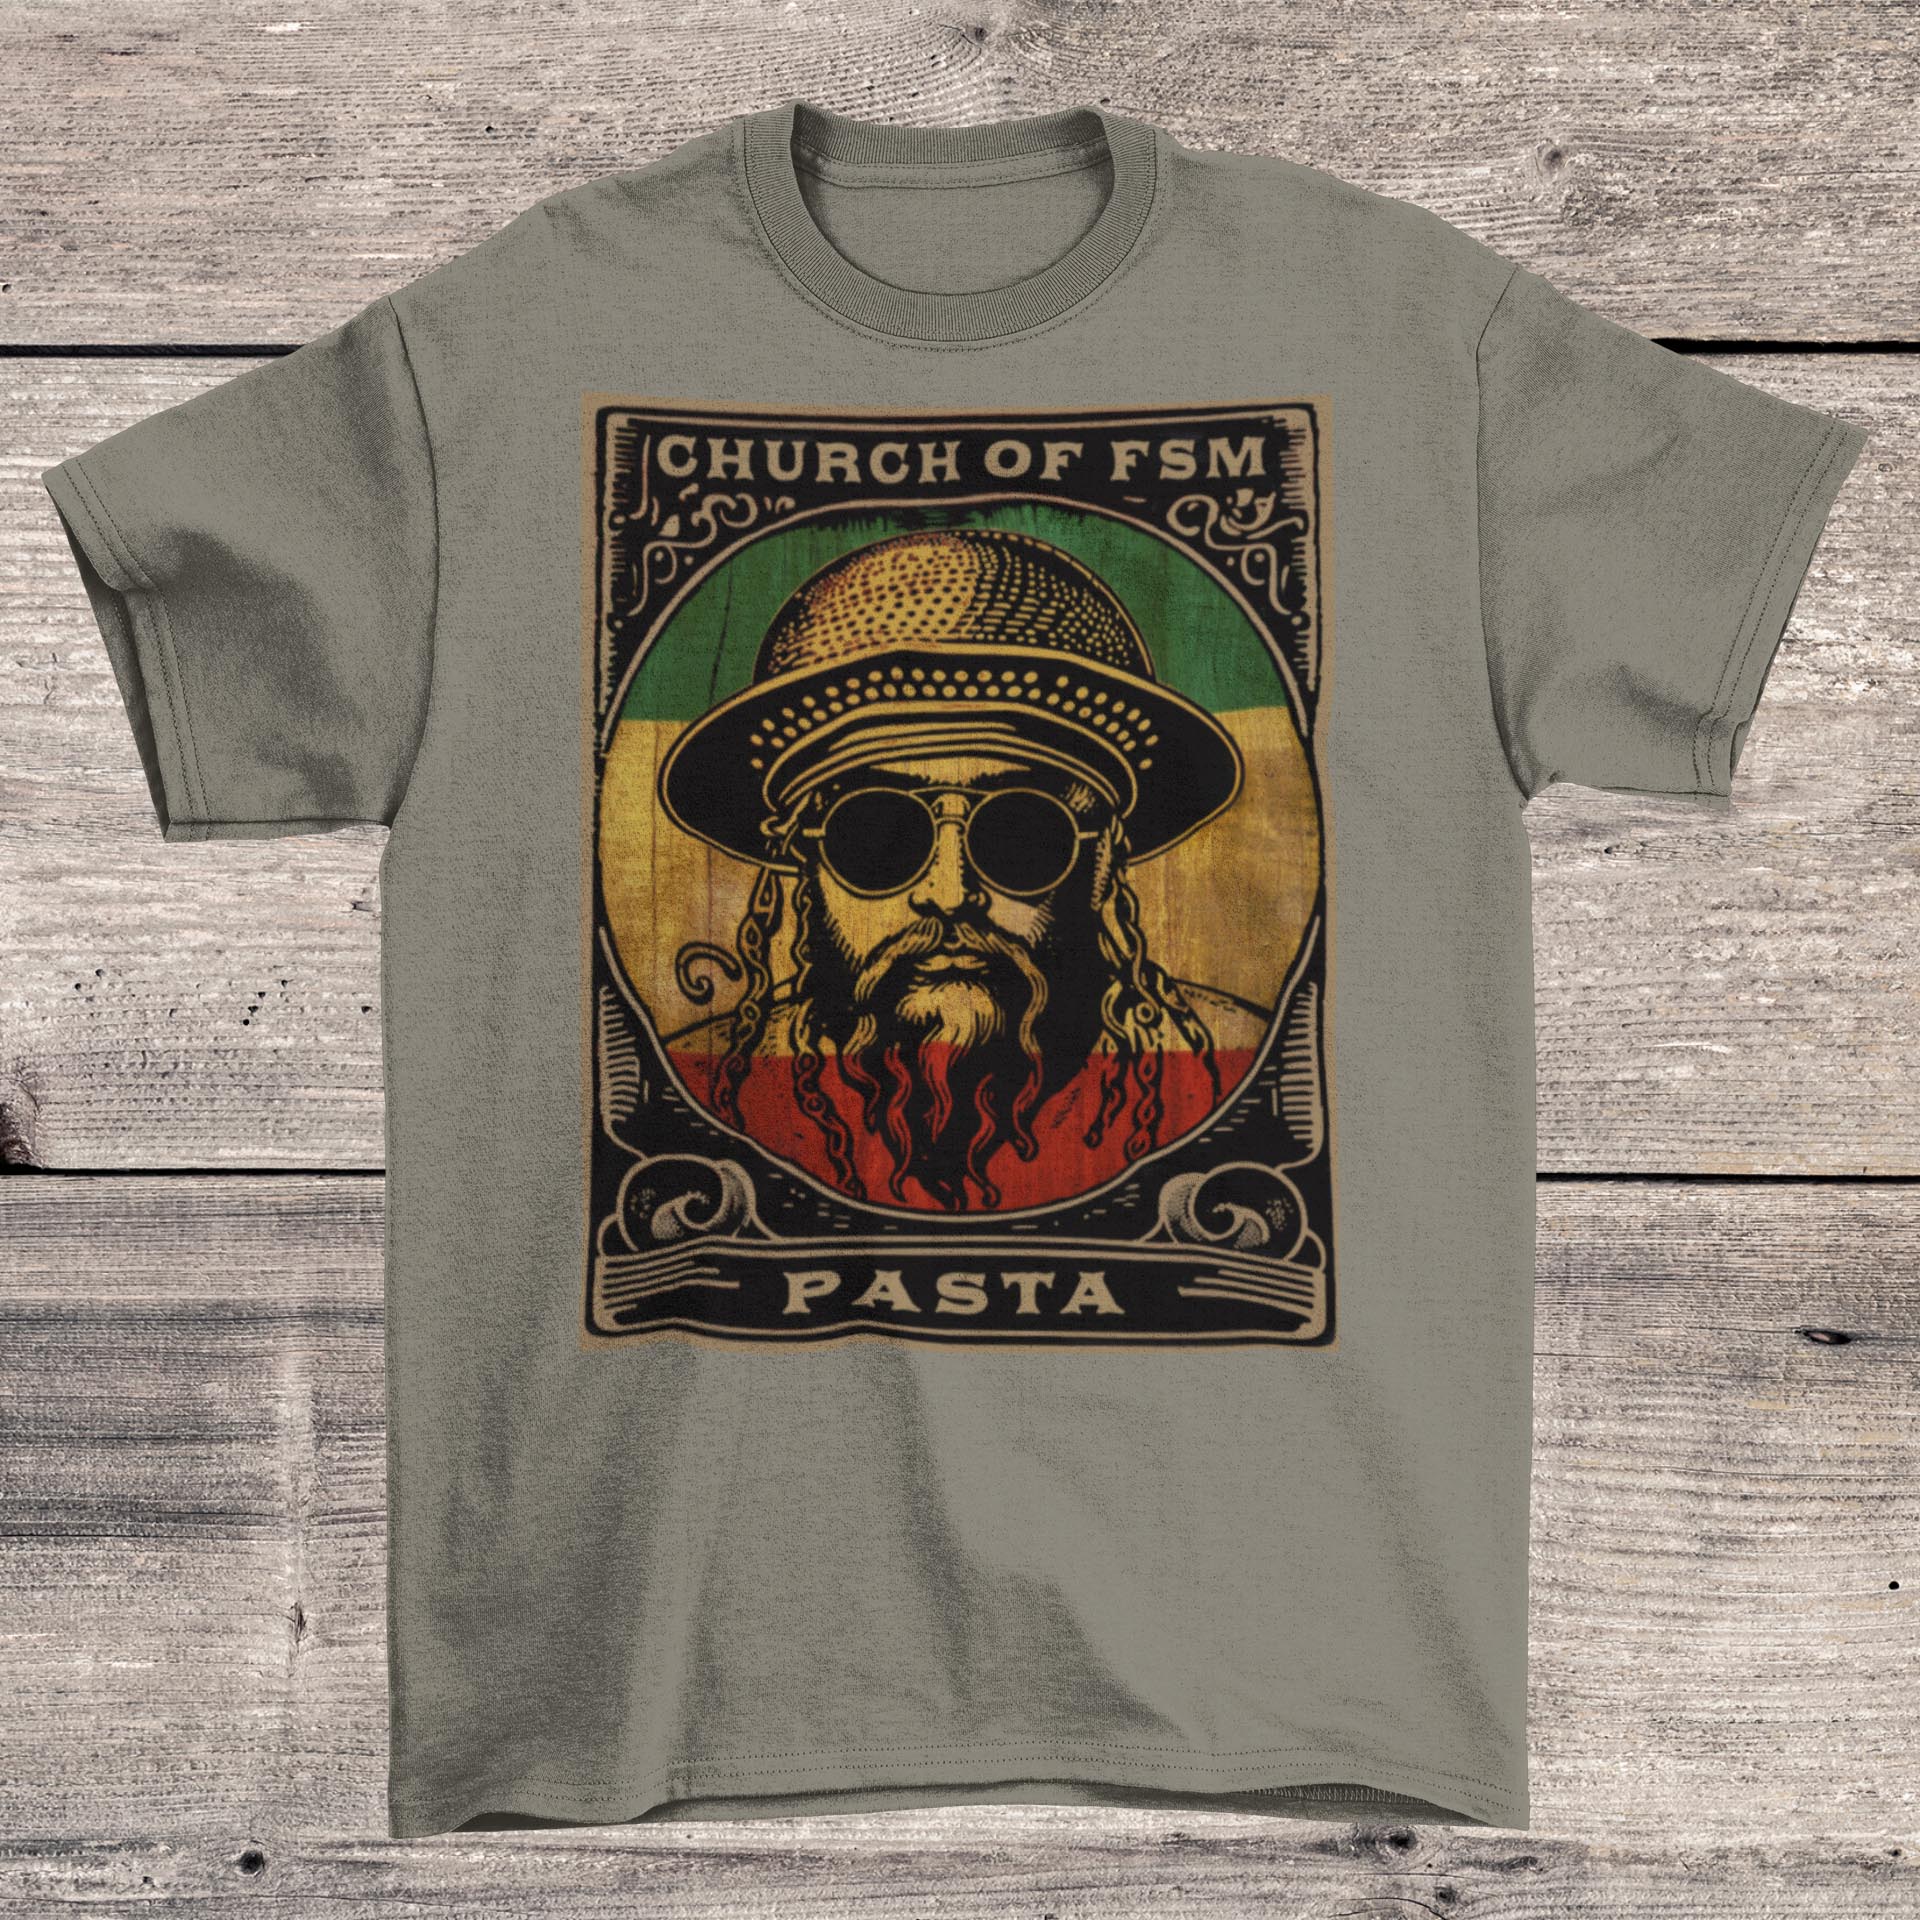 T-Shirts XS / Chestnut Pastafarianism & The Flying Spaghetti Monster (FSM) | Reggae and Atheist Inspired Pasta Graphic Art T-Shirt